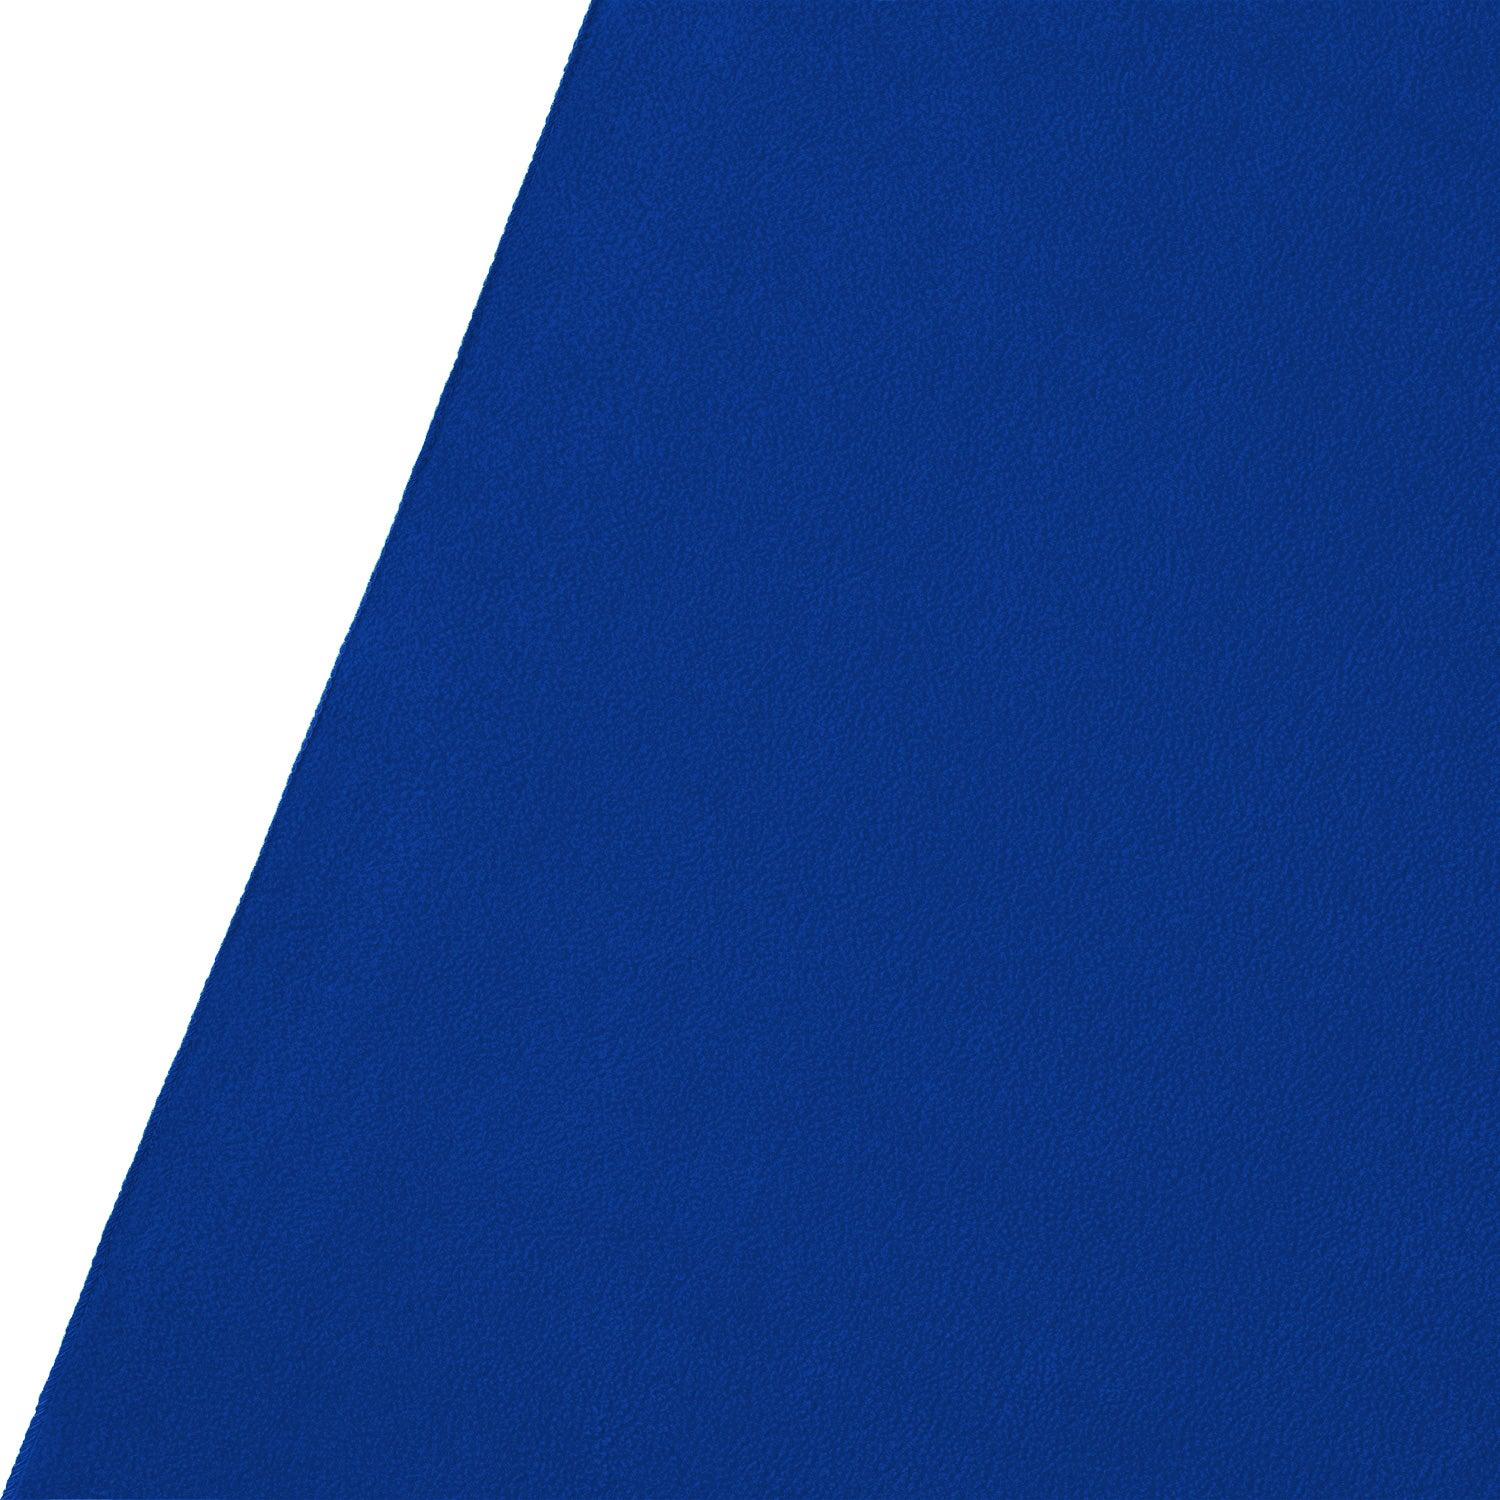 Wrinkle-Resistant Backdrop - Chroma-Key Blue/Royal Blue (9' x 10')